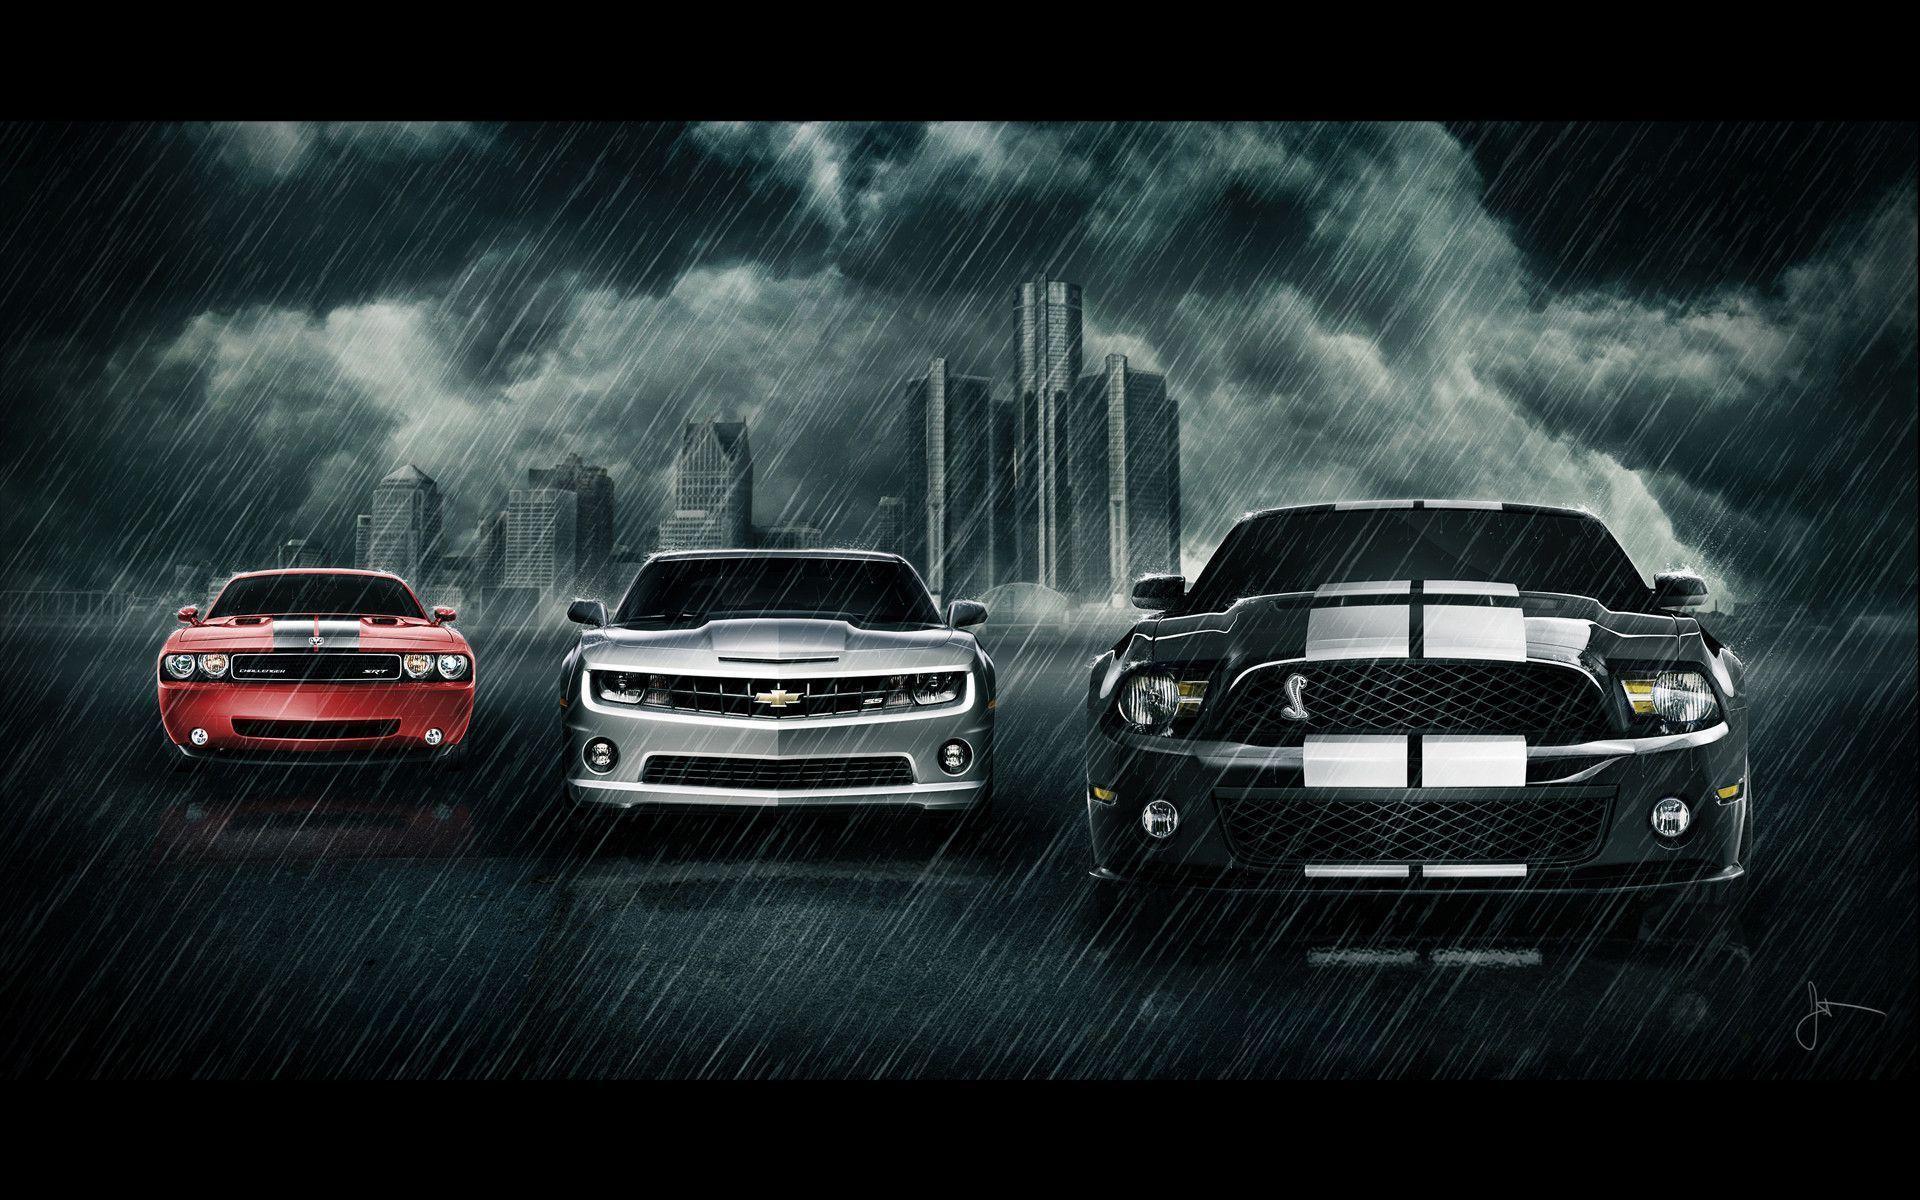 Camaro, Challenger, and Mustang Wallpaper 31081368